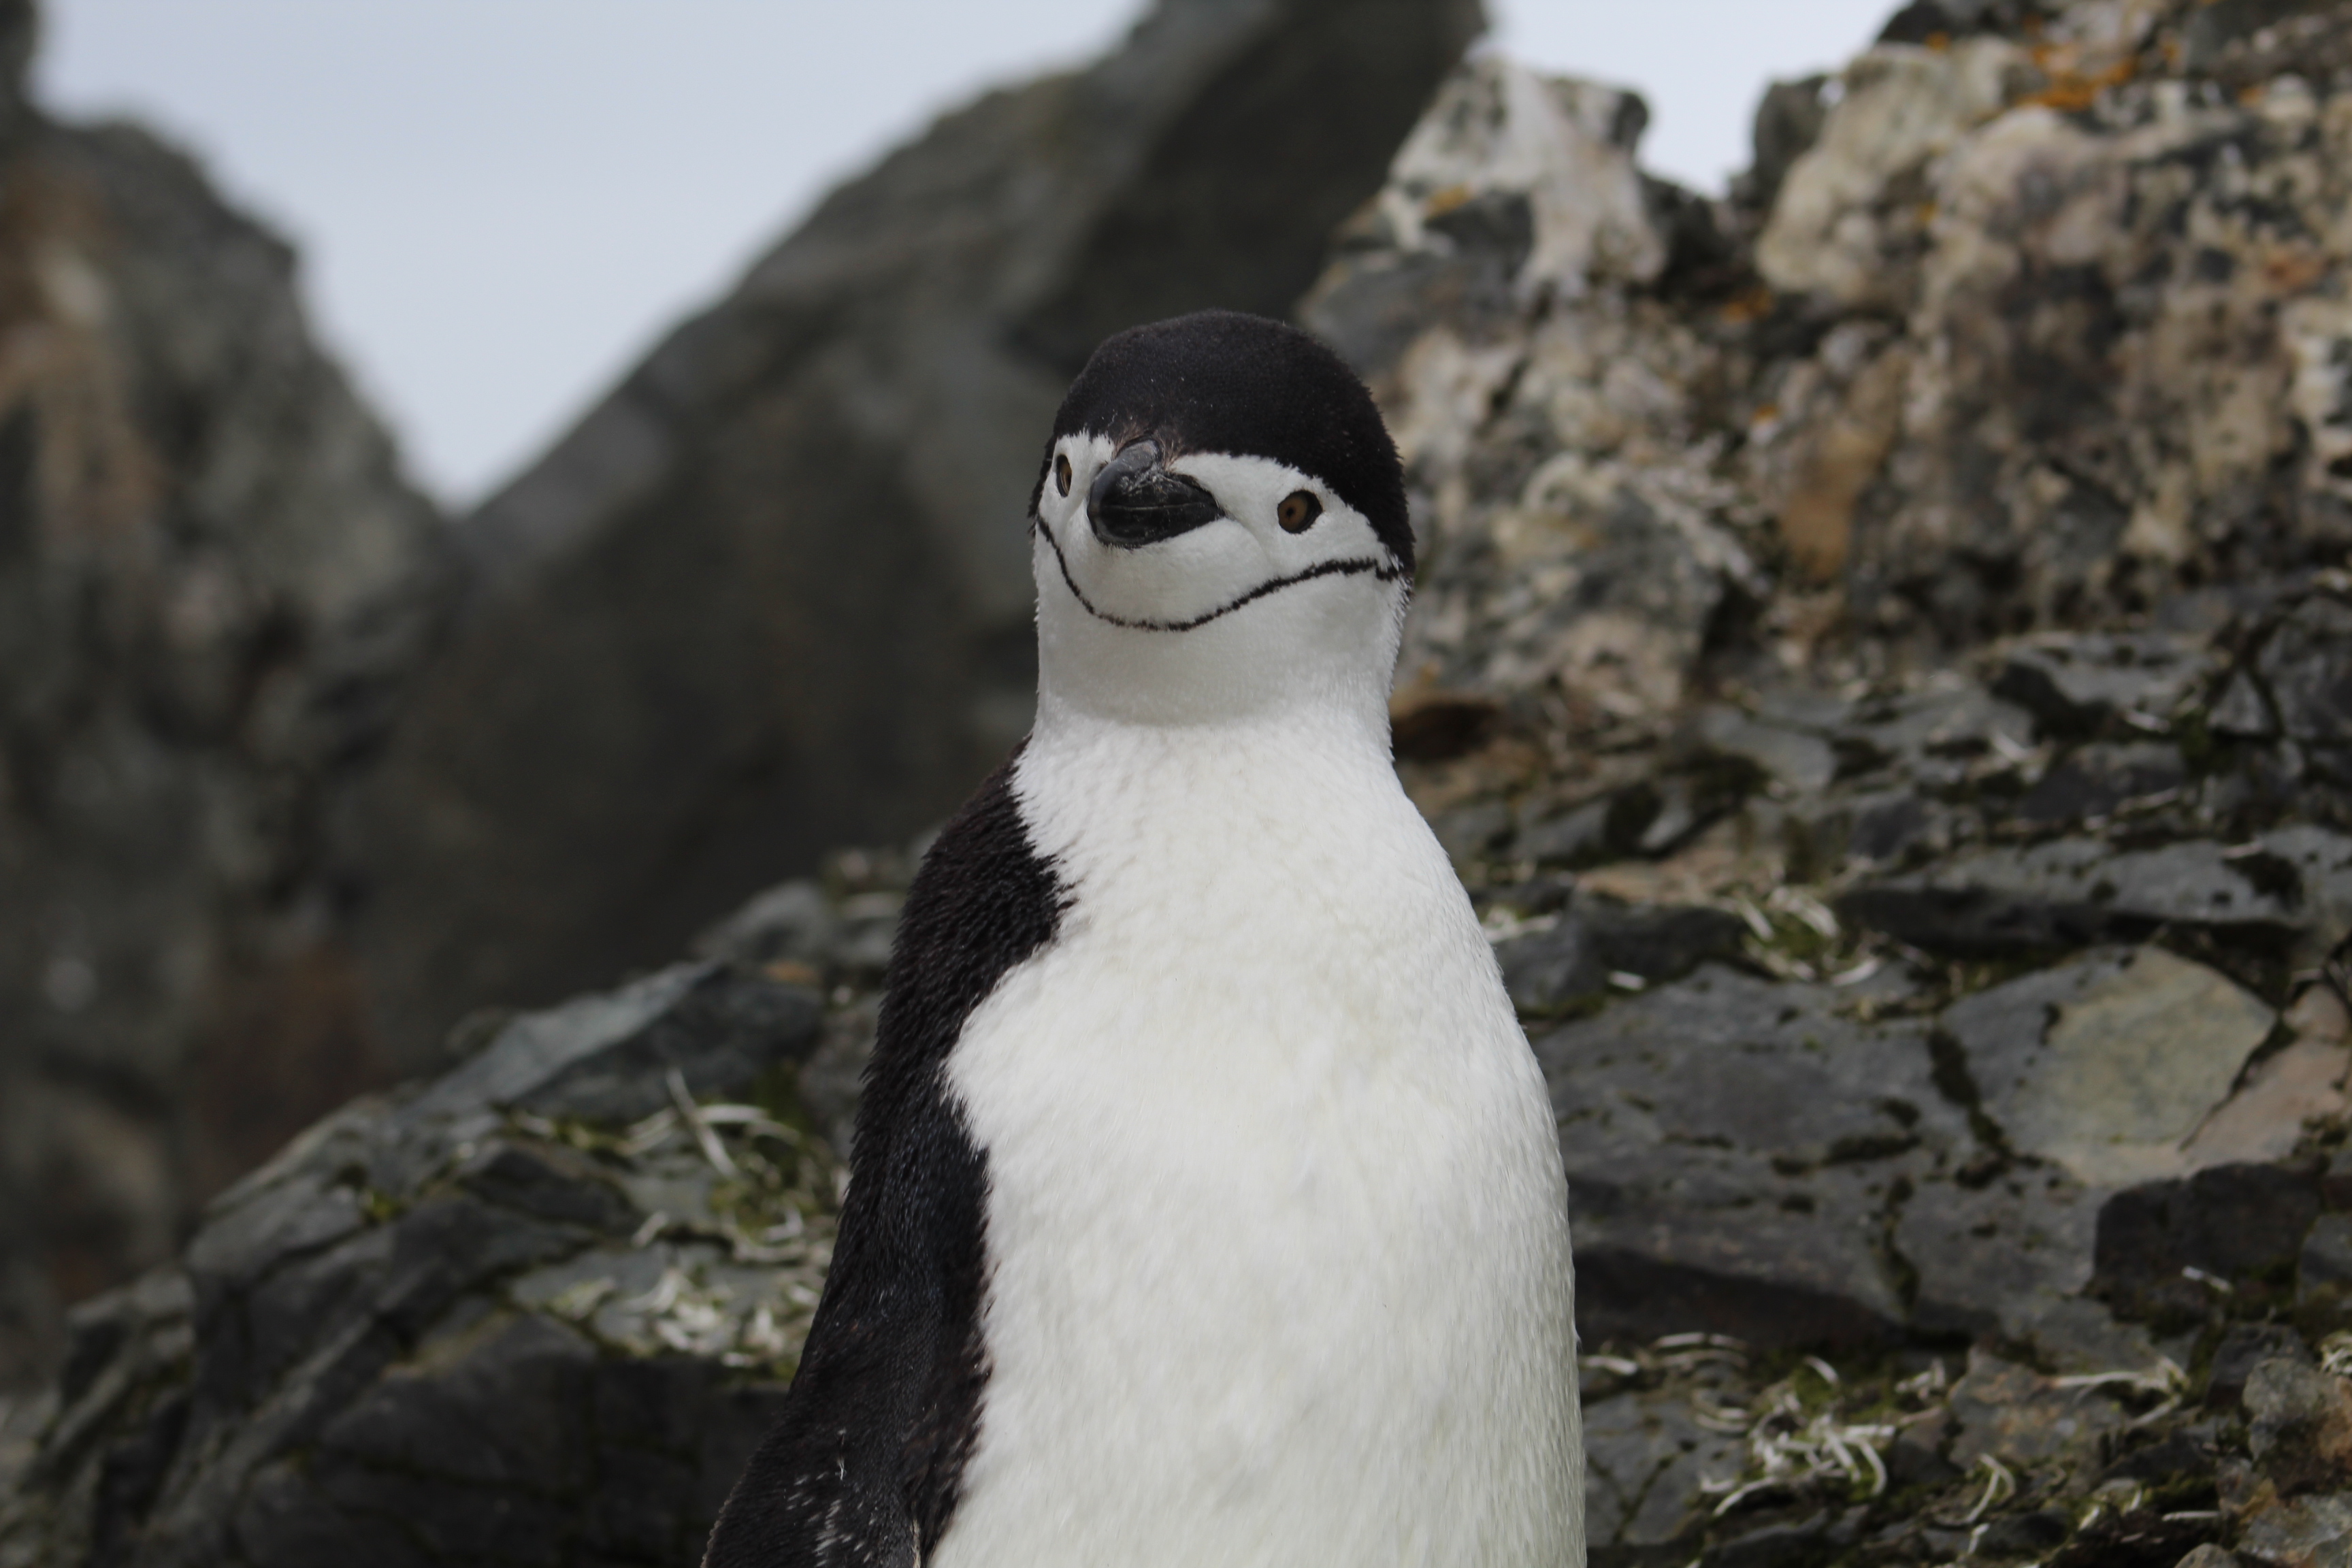 Chinstrap Penguin on Juan Carlos Base, Antarctica Feb. '20